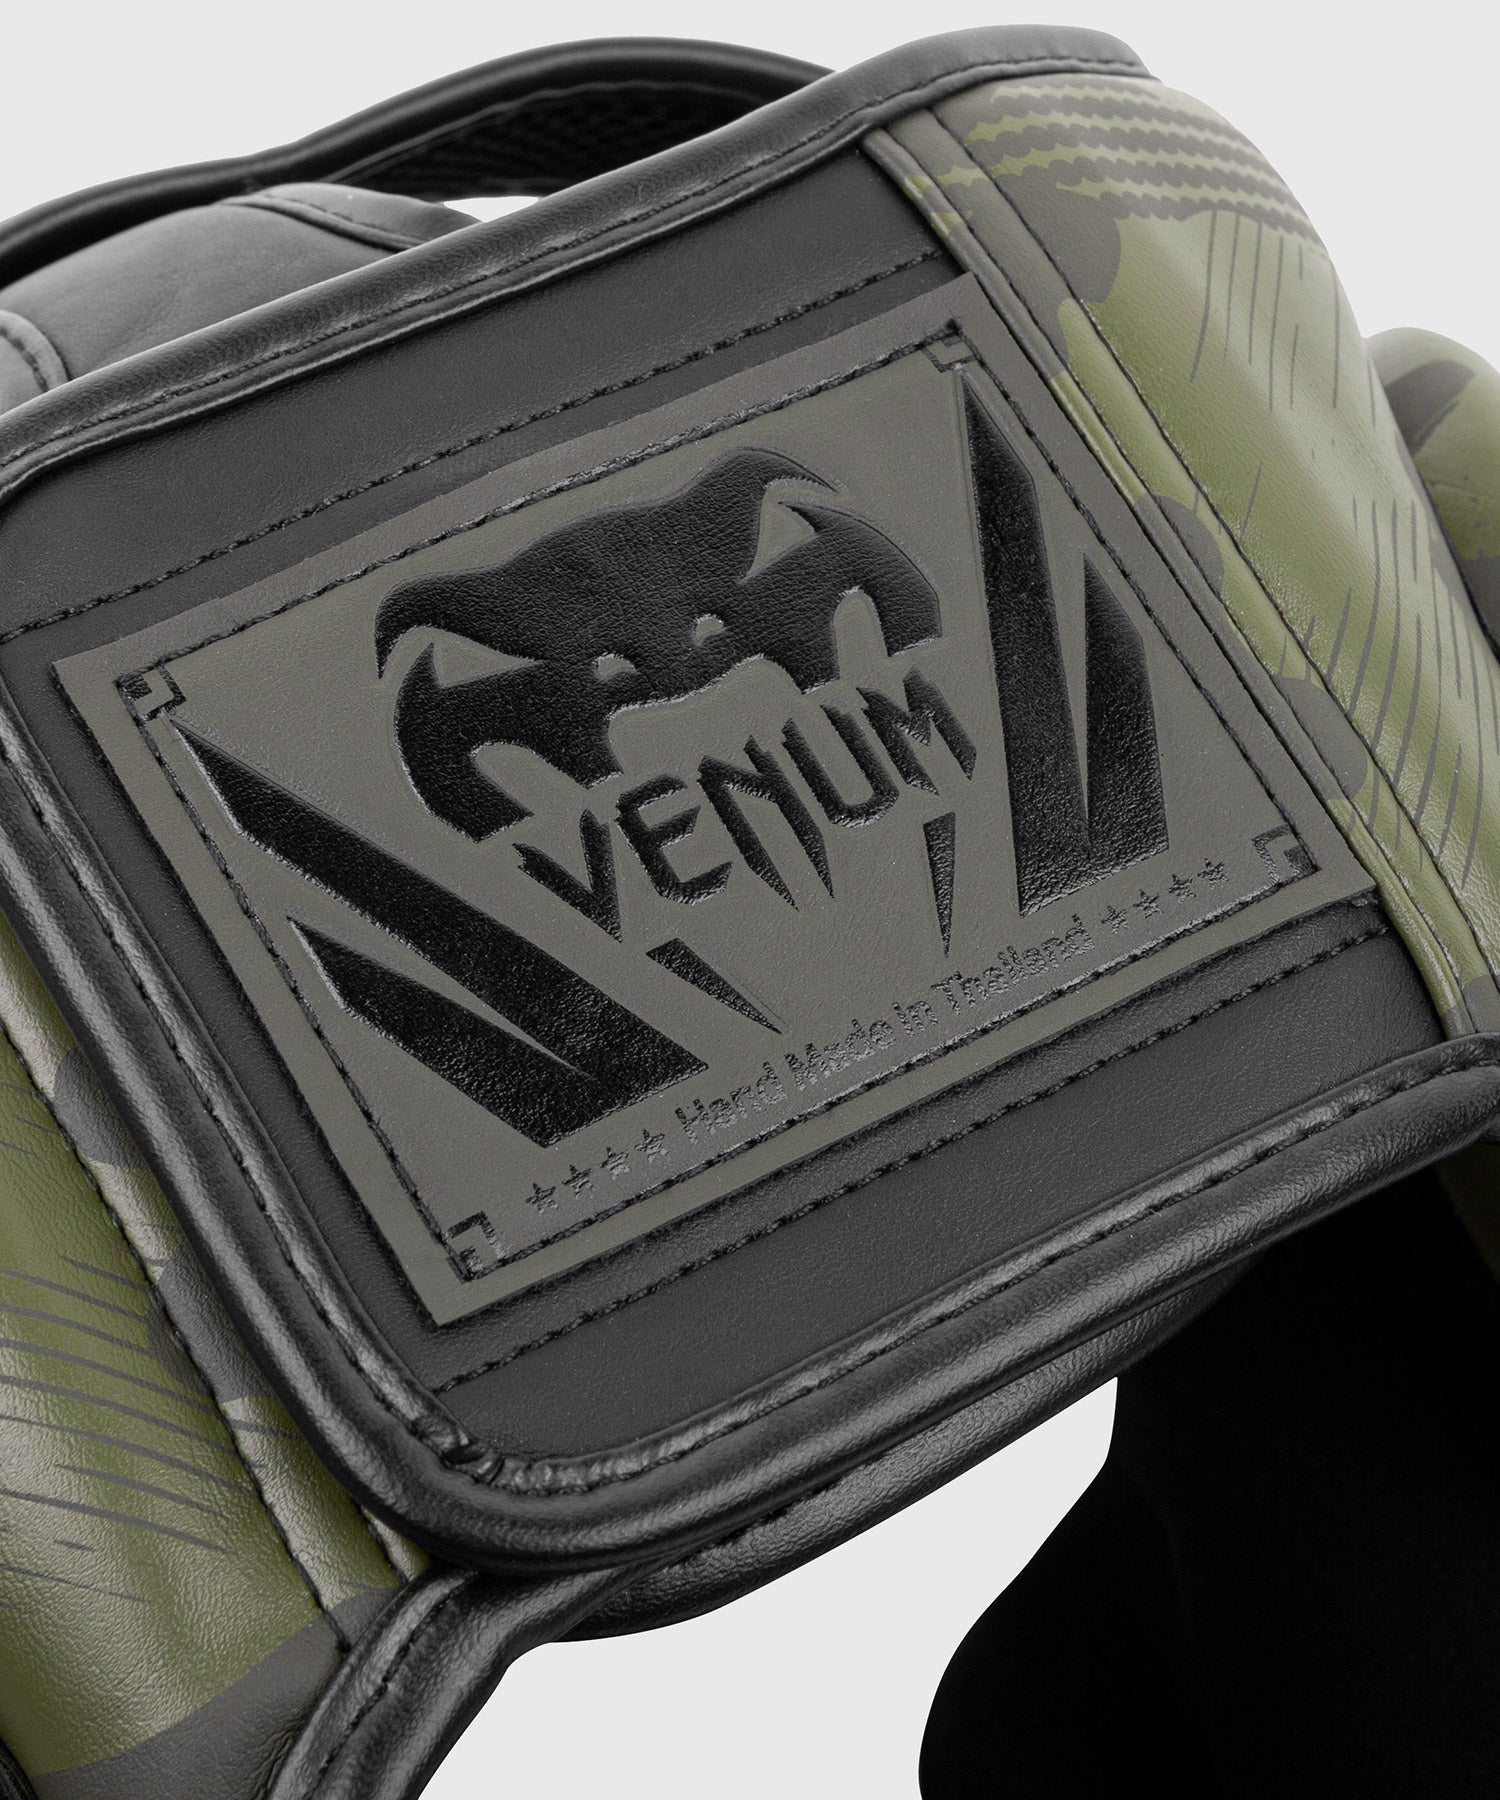 Gants de boxe Venum Elite - Camouflage kaki – Venum France